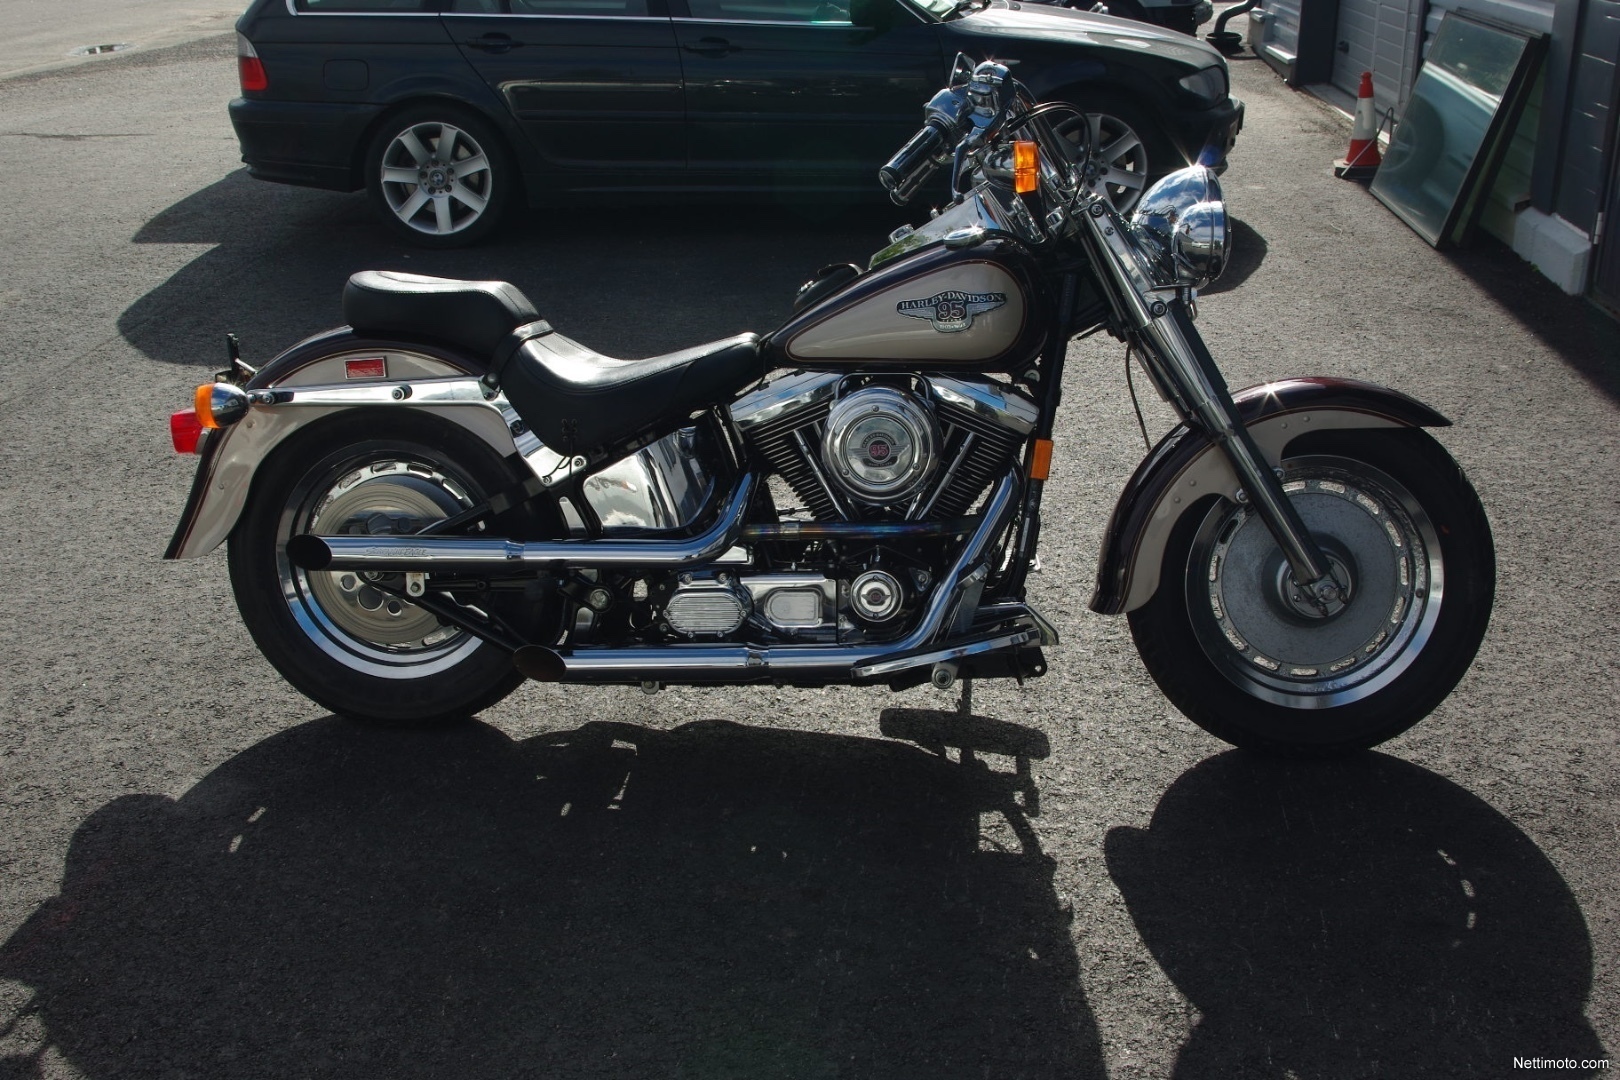  Harley Davidson Softail FLSTF Fat Boy MYYTY 1 400 cm 